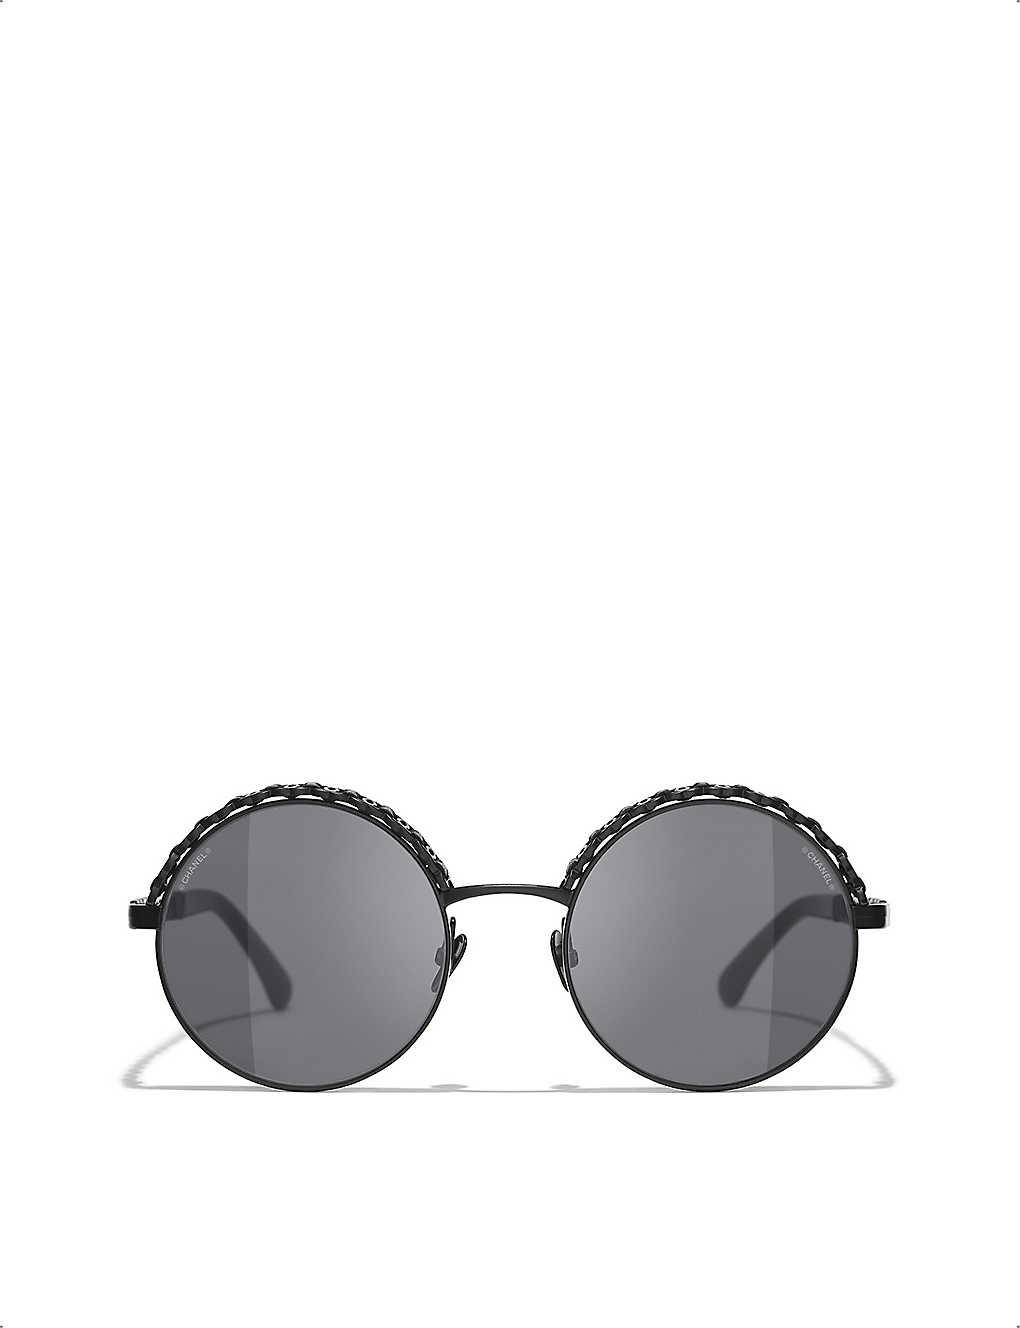 Chanel Round Sunglasses in Grey